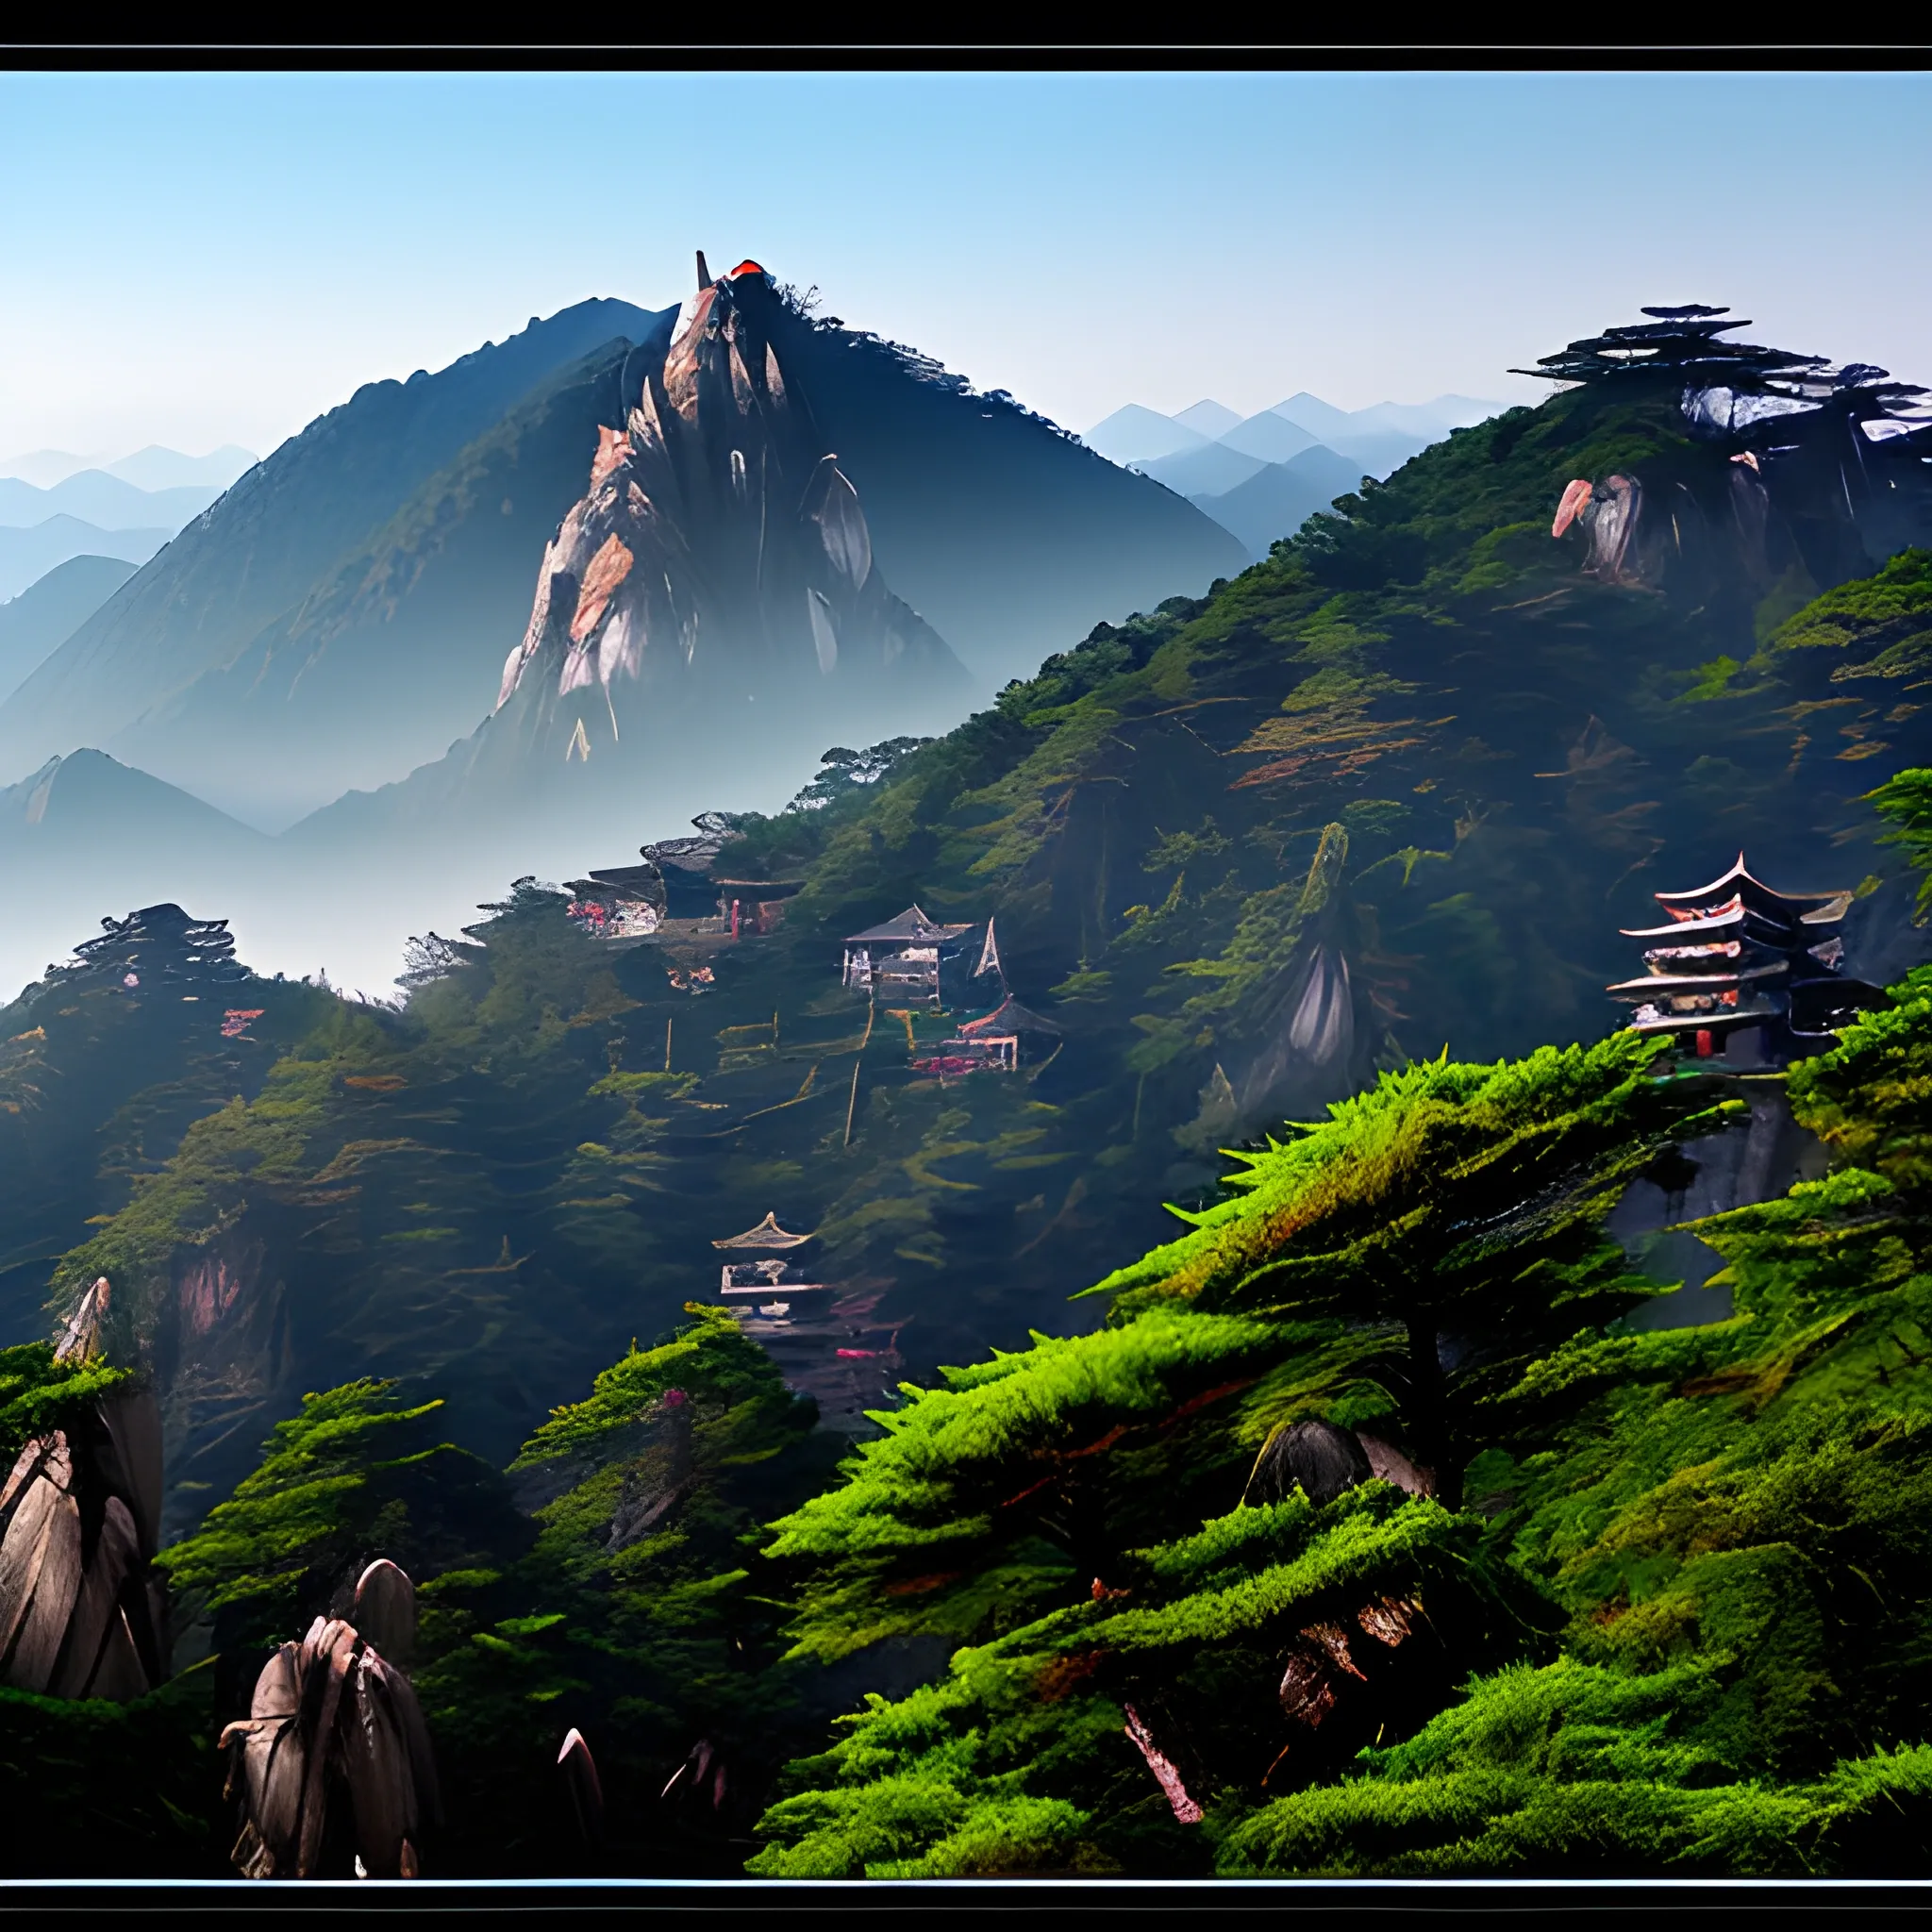 solitaire huangshan mountain


